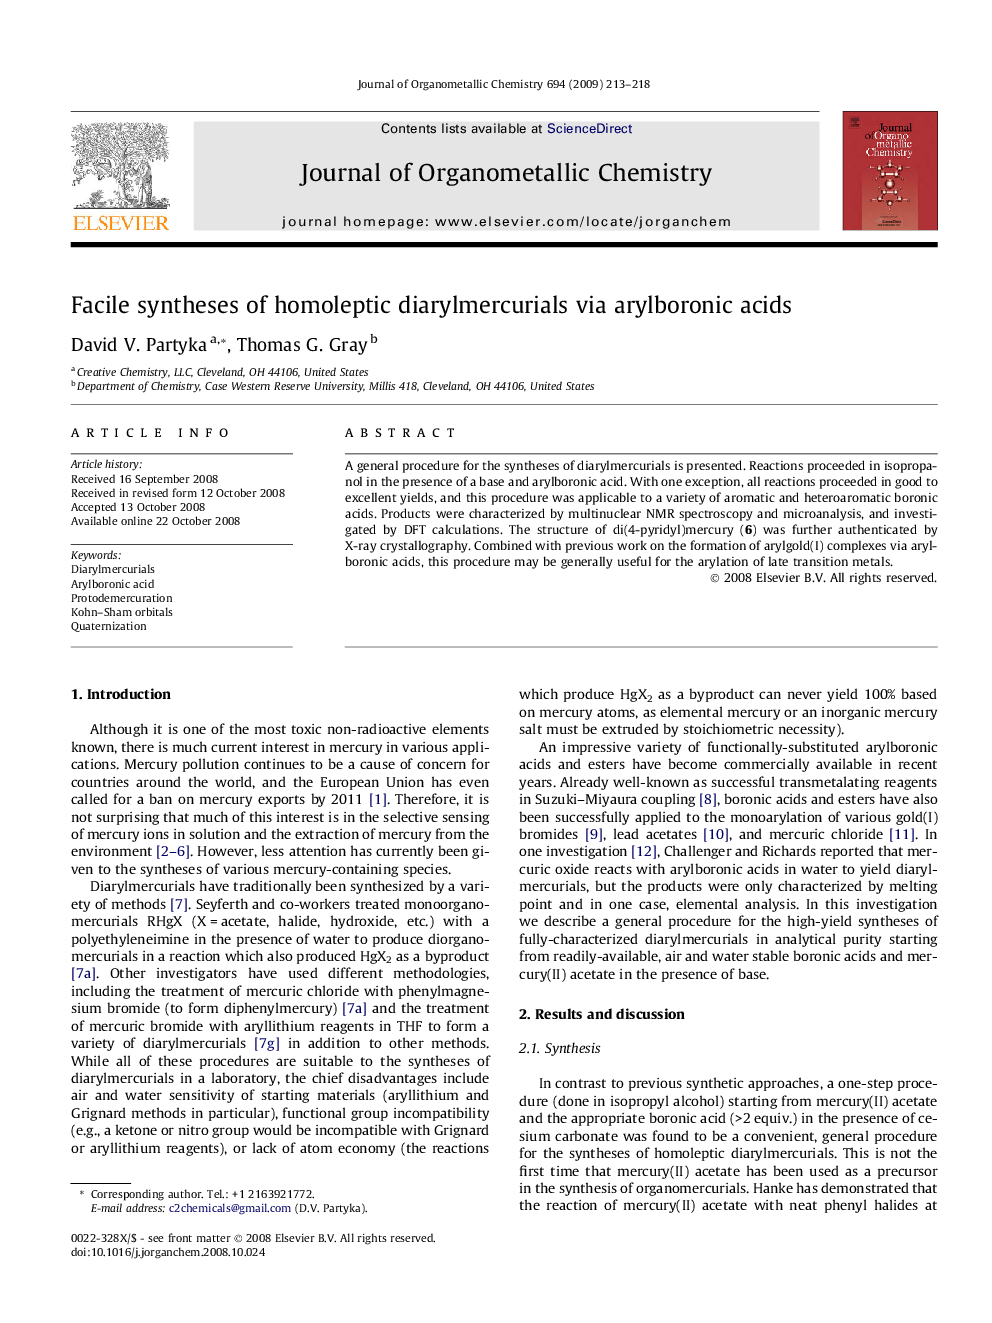 Facile syntheses of homoleptic diarylmercurials via arylboronic acids